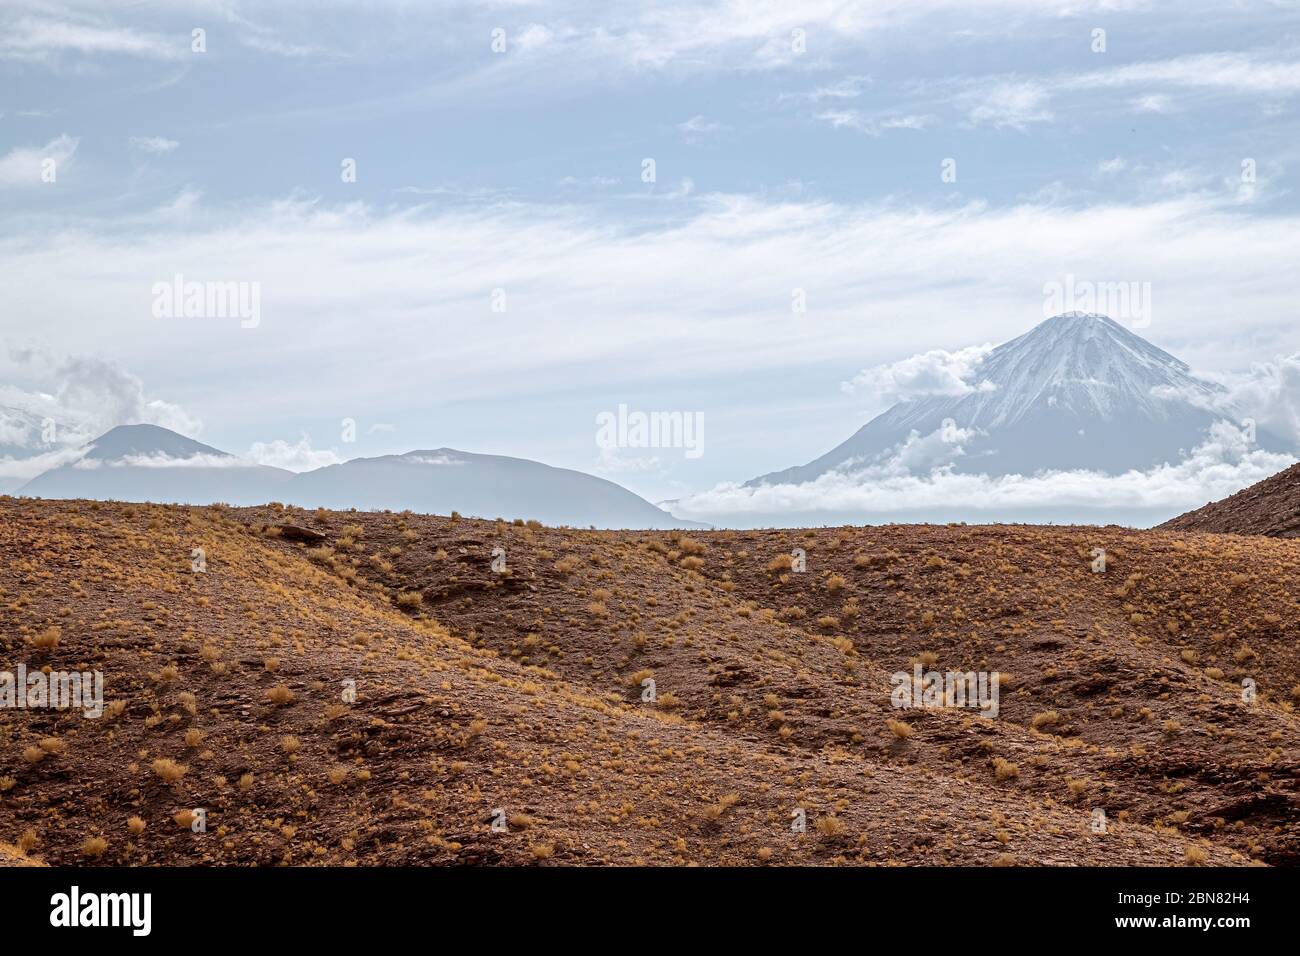 Vulkan Licancabur von Norden von San Dedrol de Atacama und der B-245 Route gesehen. Stockfoto